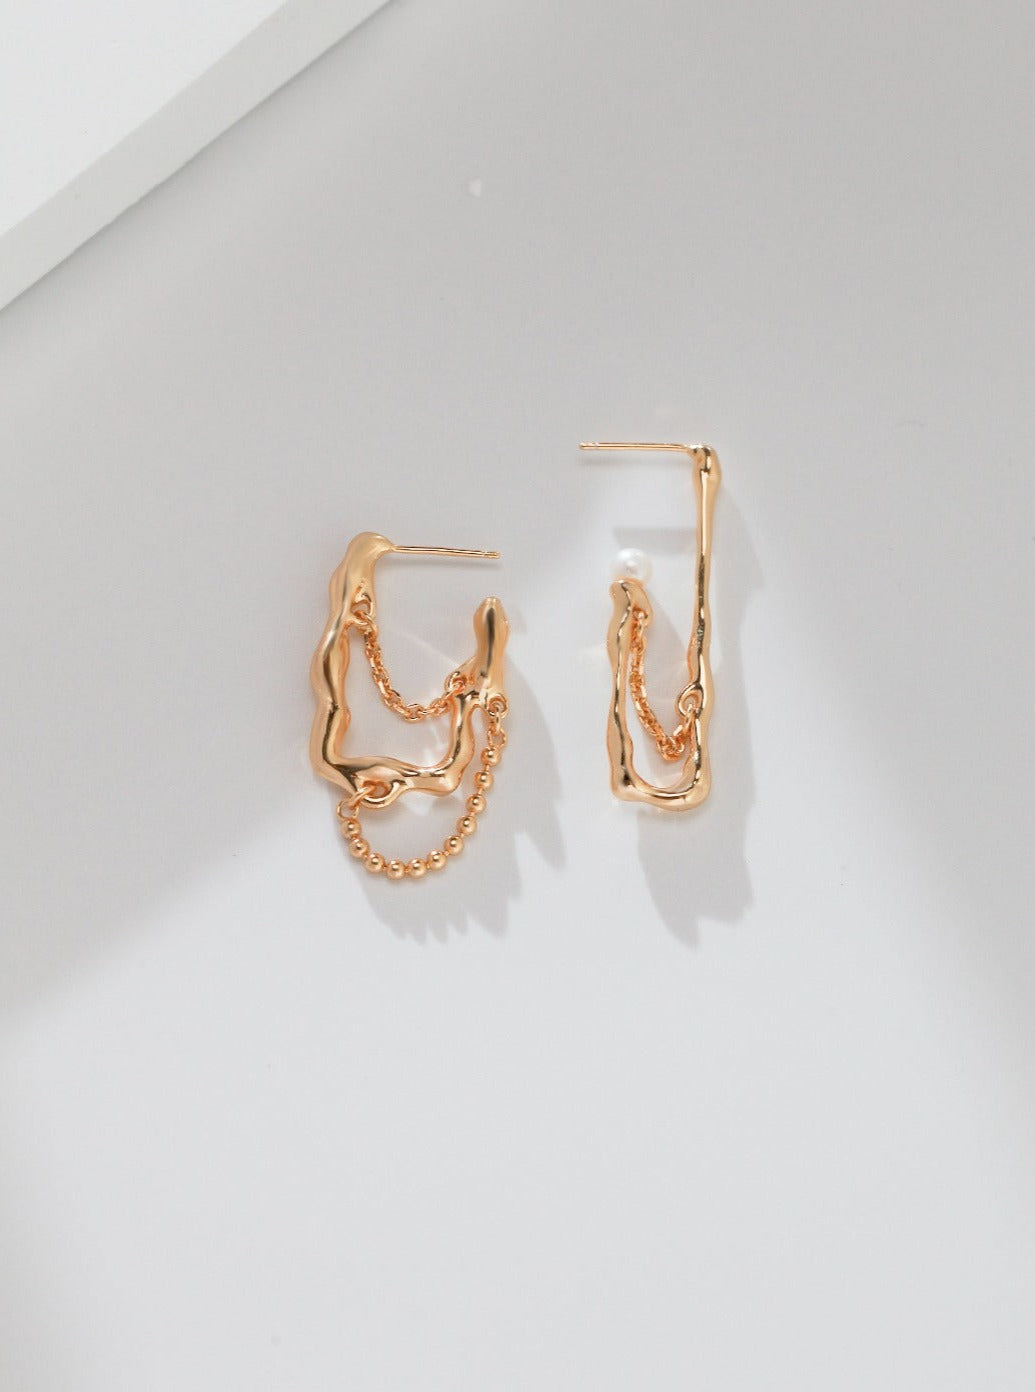 Asymmetric Square Pearl Earrings earrings from SHOPQAQ